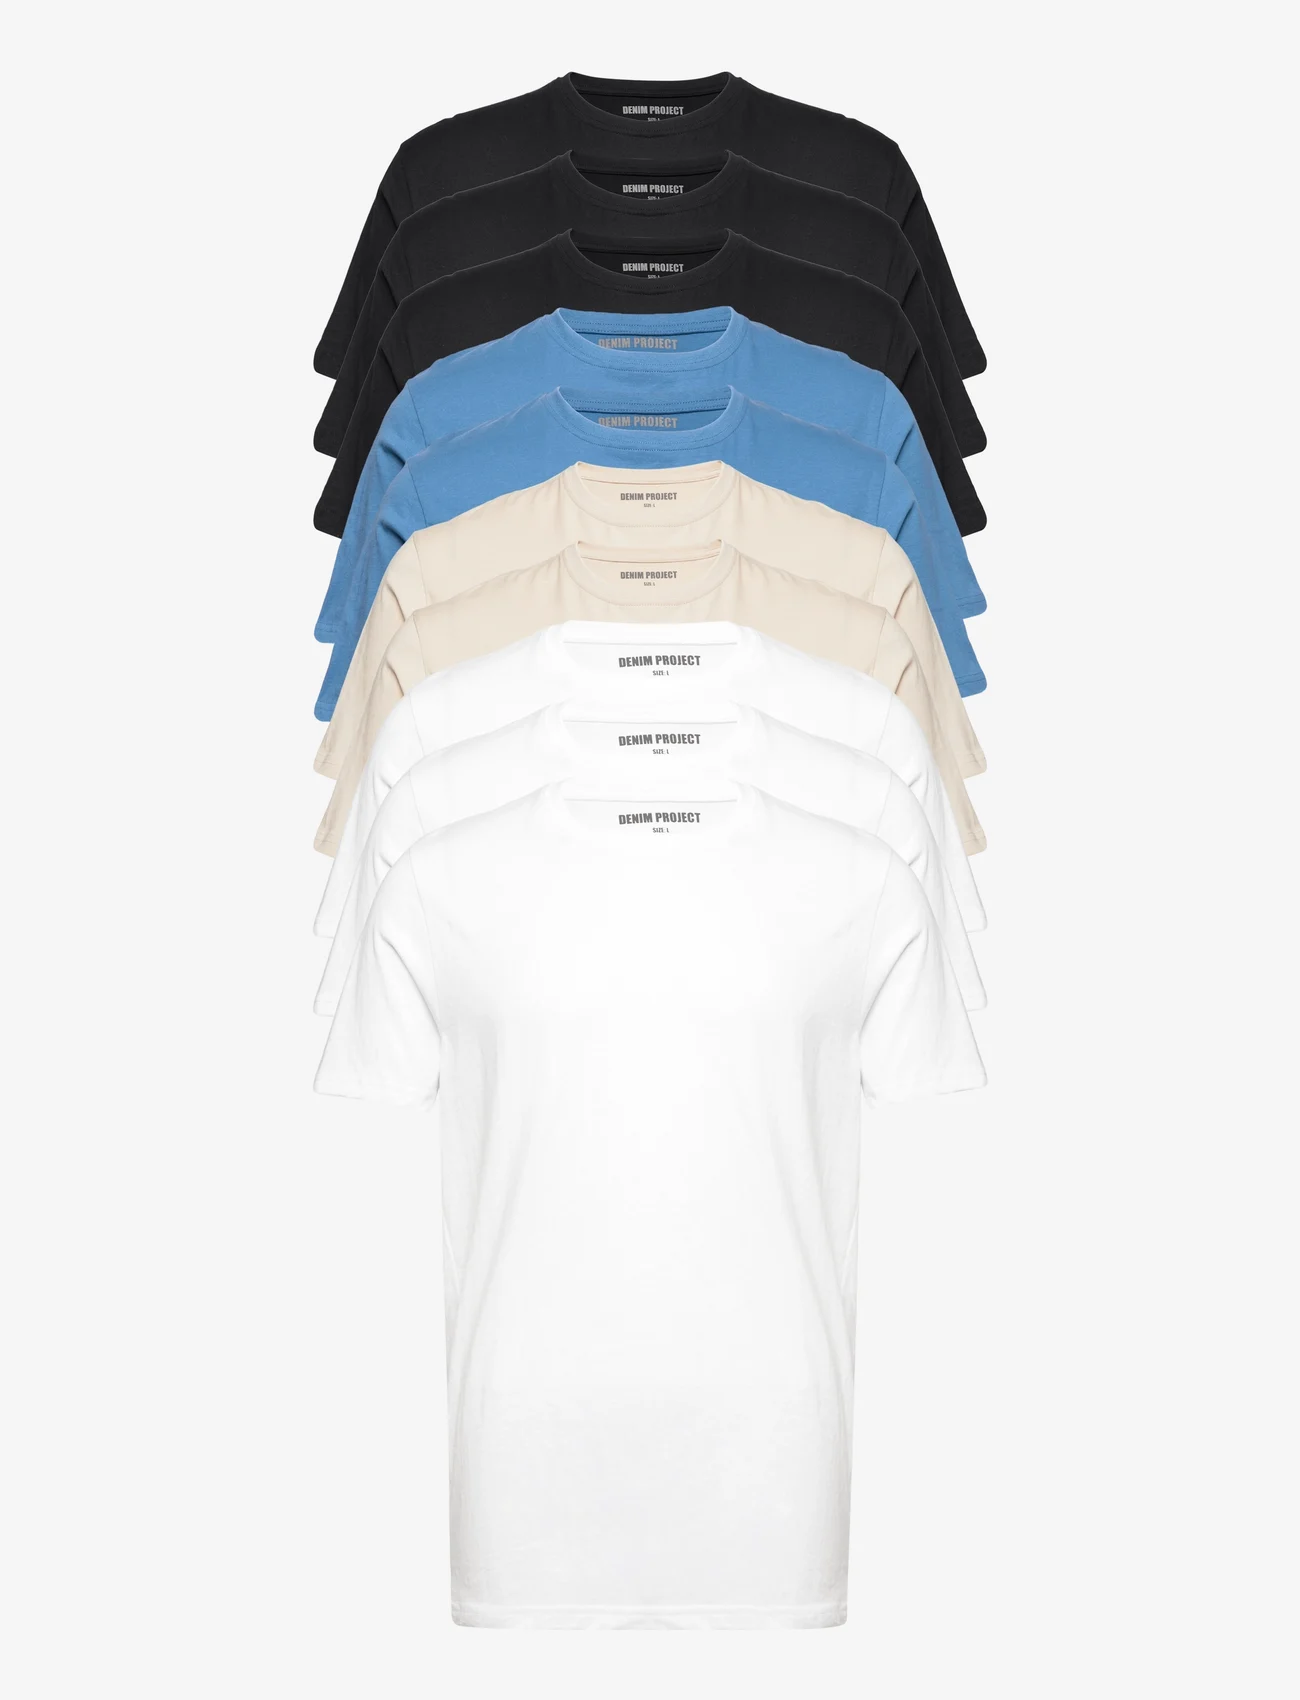 Denim project - 10 Pack T-SHIRT - laisvalaikio marškinėliai - 2x sand 2x steal blue 3x white 3x black - 0